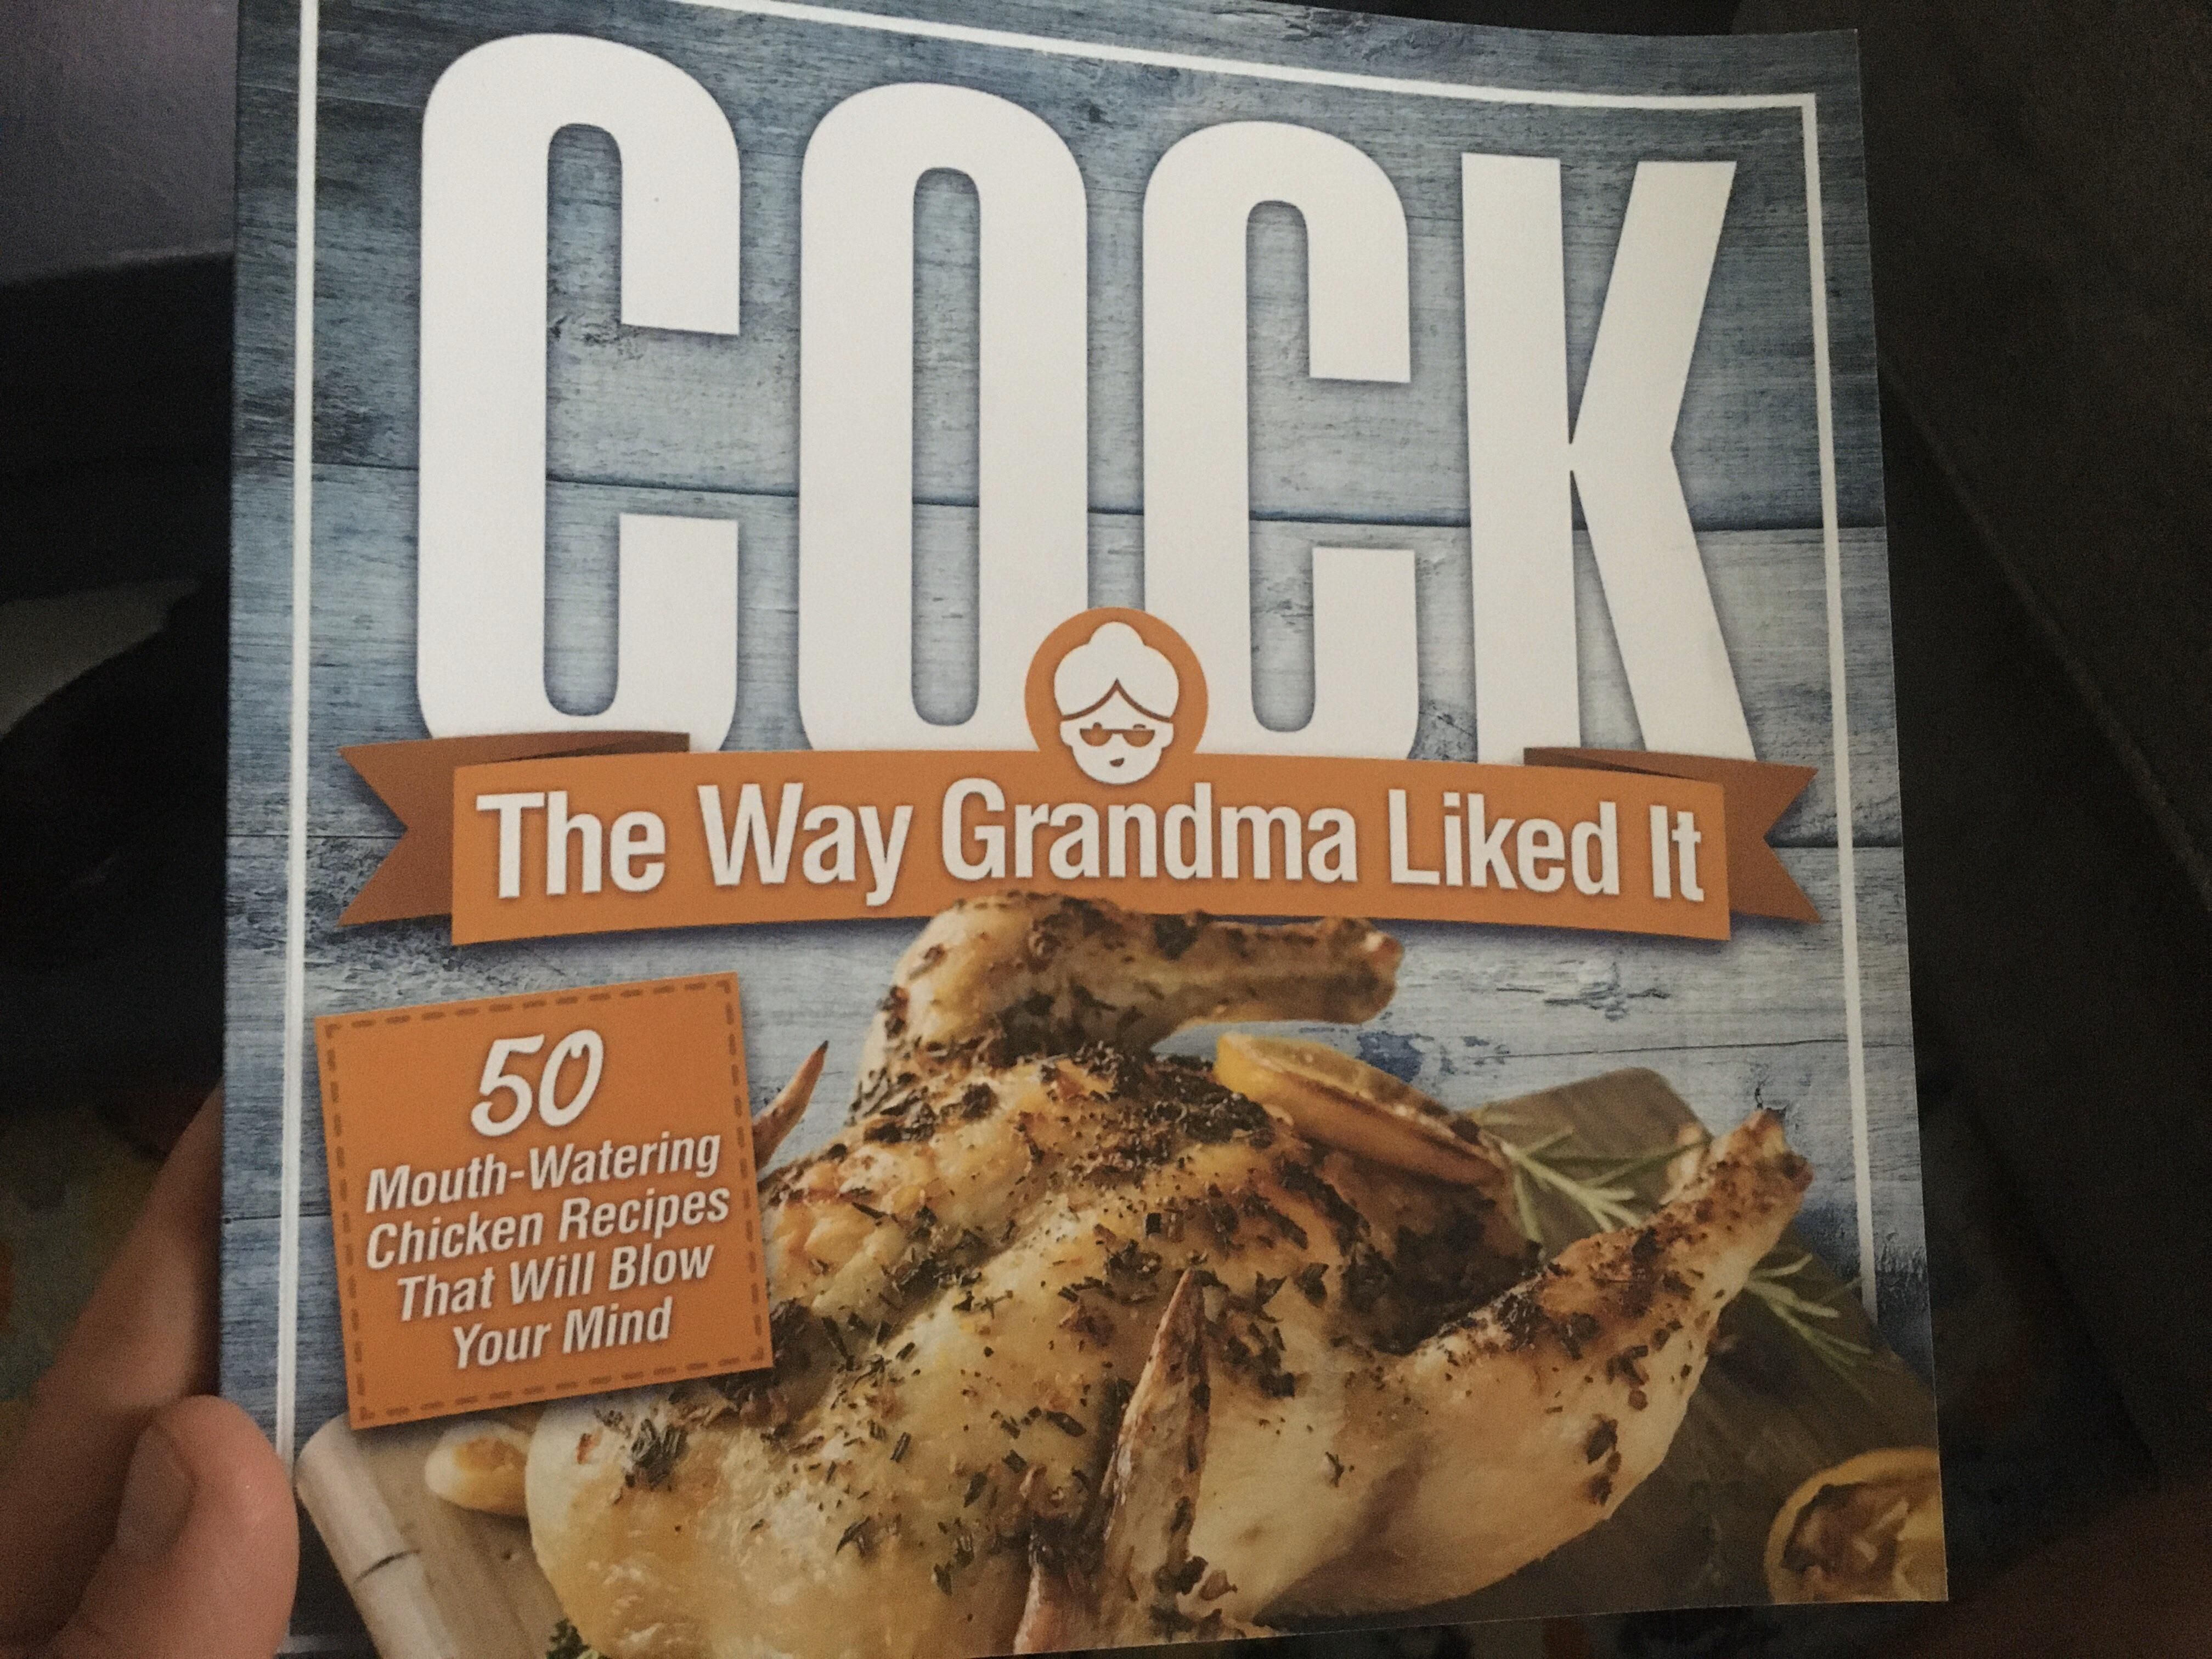 Just your average recipe book